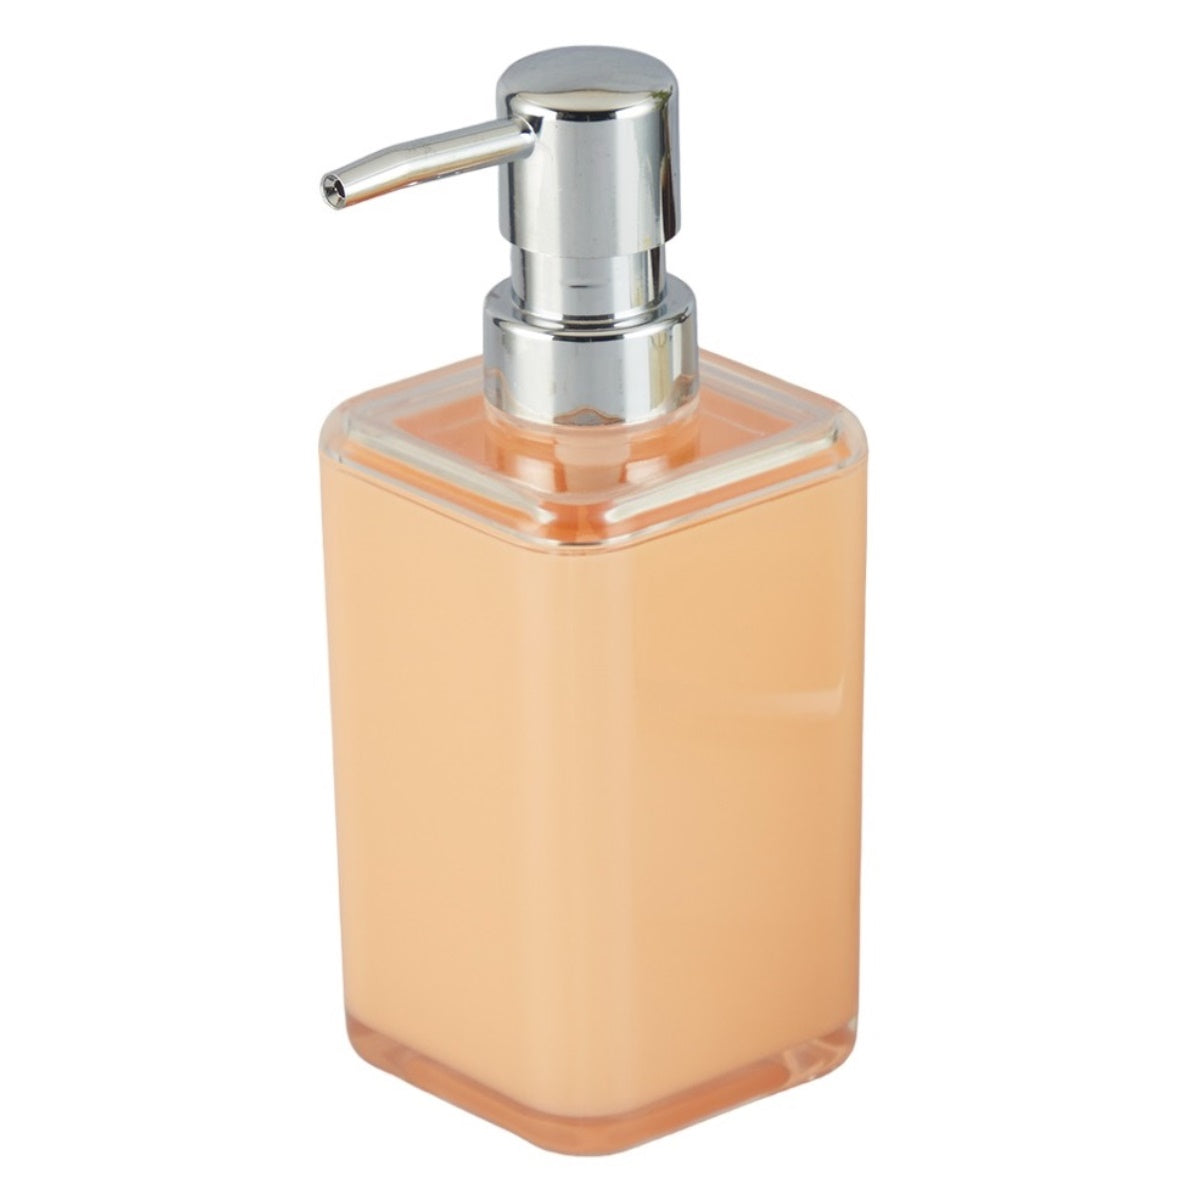 Acrylic Soap Dispenser Pump for Bathroom (10016)